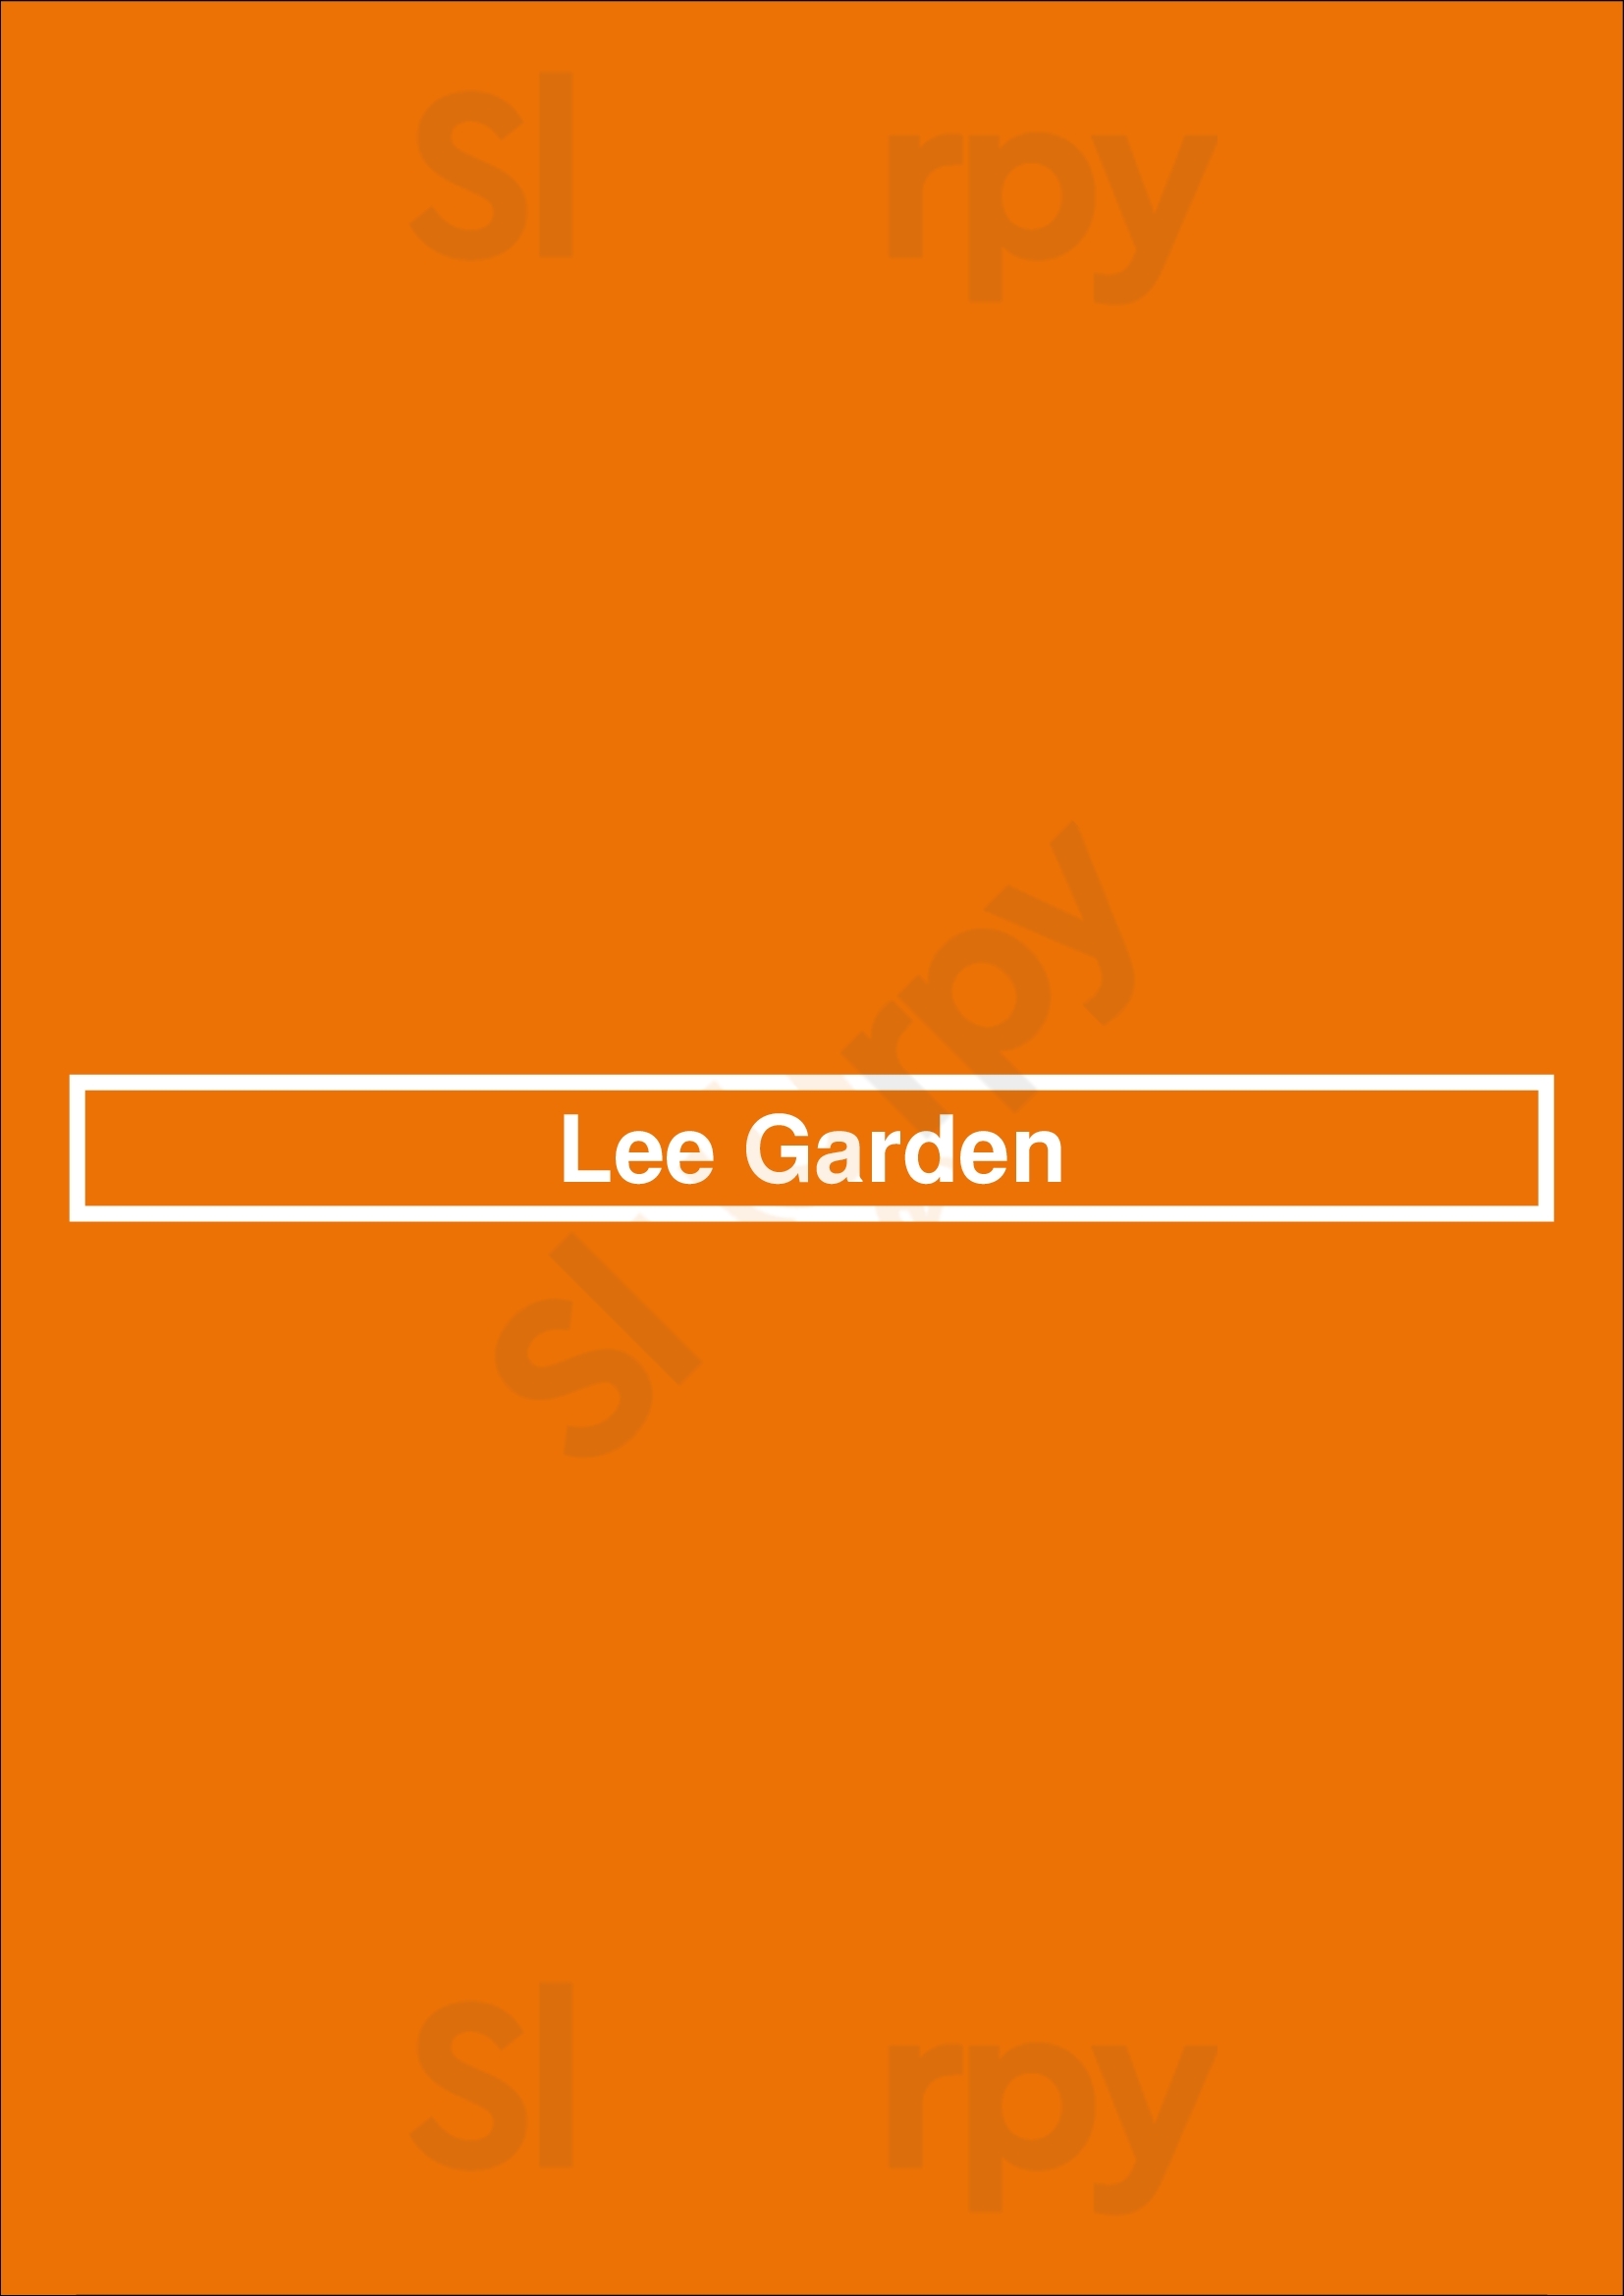 Lee Garden Newry Menu - 1